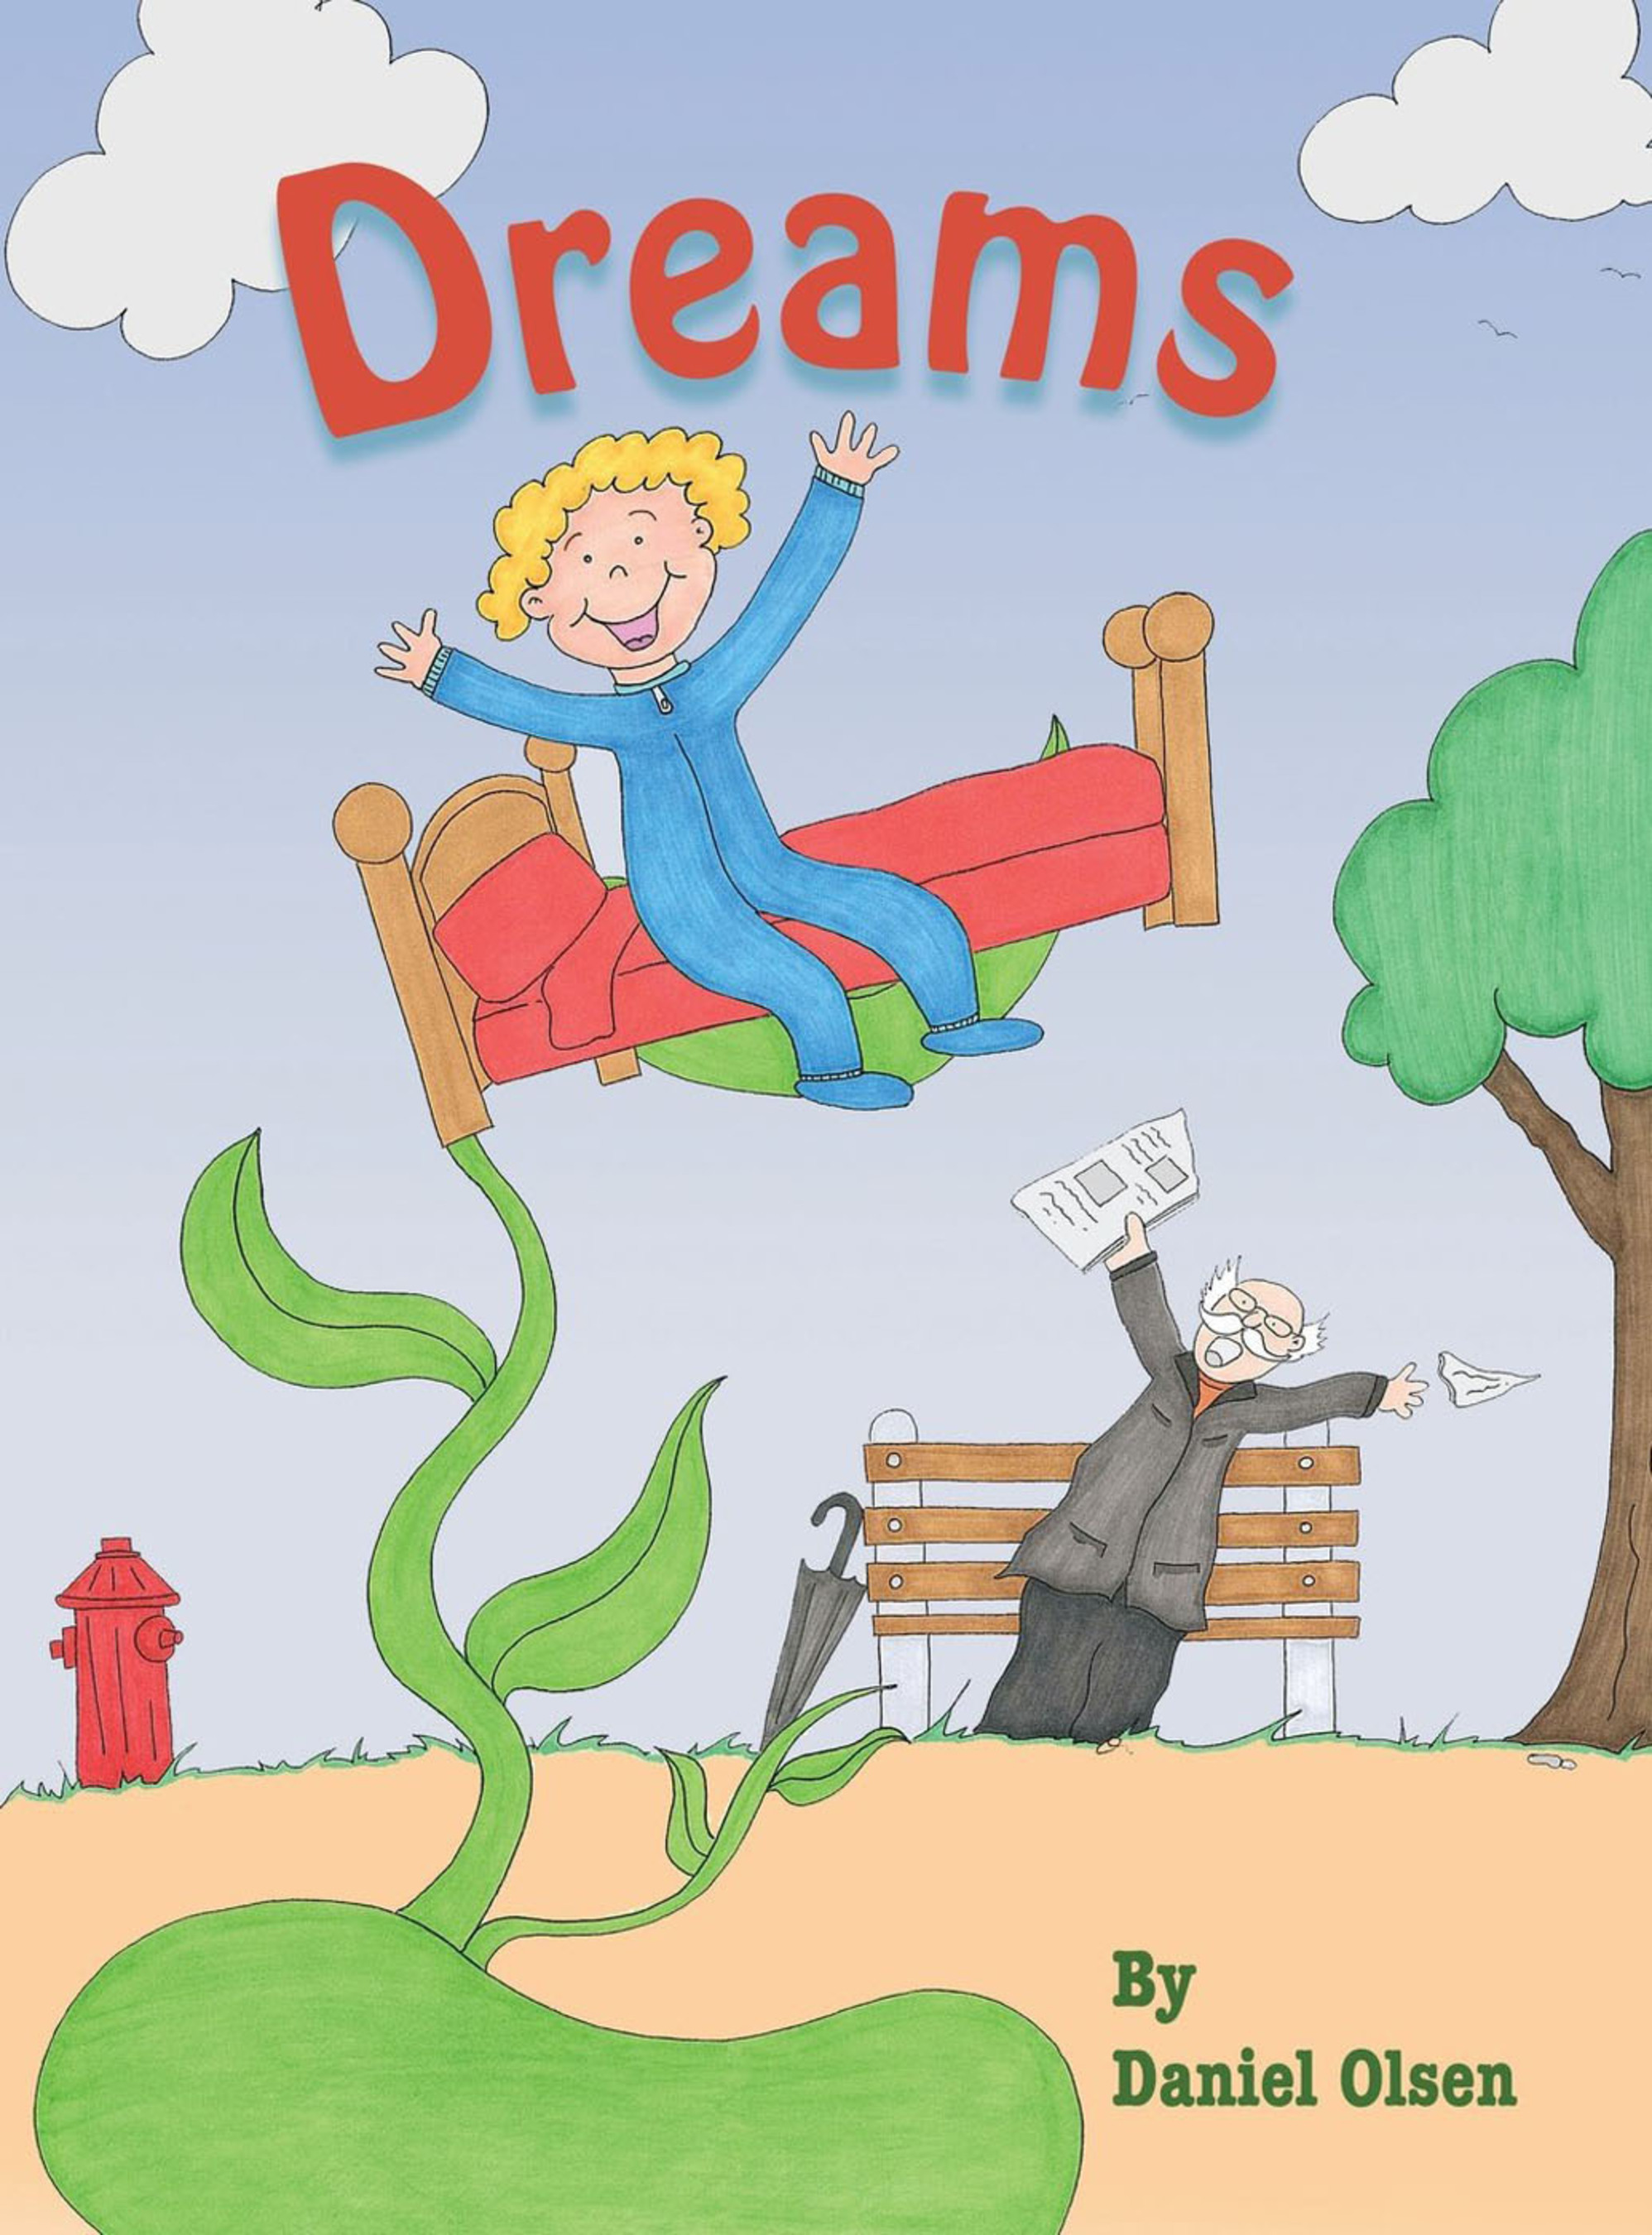 Dreams by Daniel Olsen book cover. (PRNewsFoto/Daniel Olsen) (PRNewsFoto/DANIEL OLSEN)